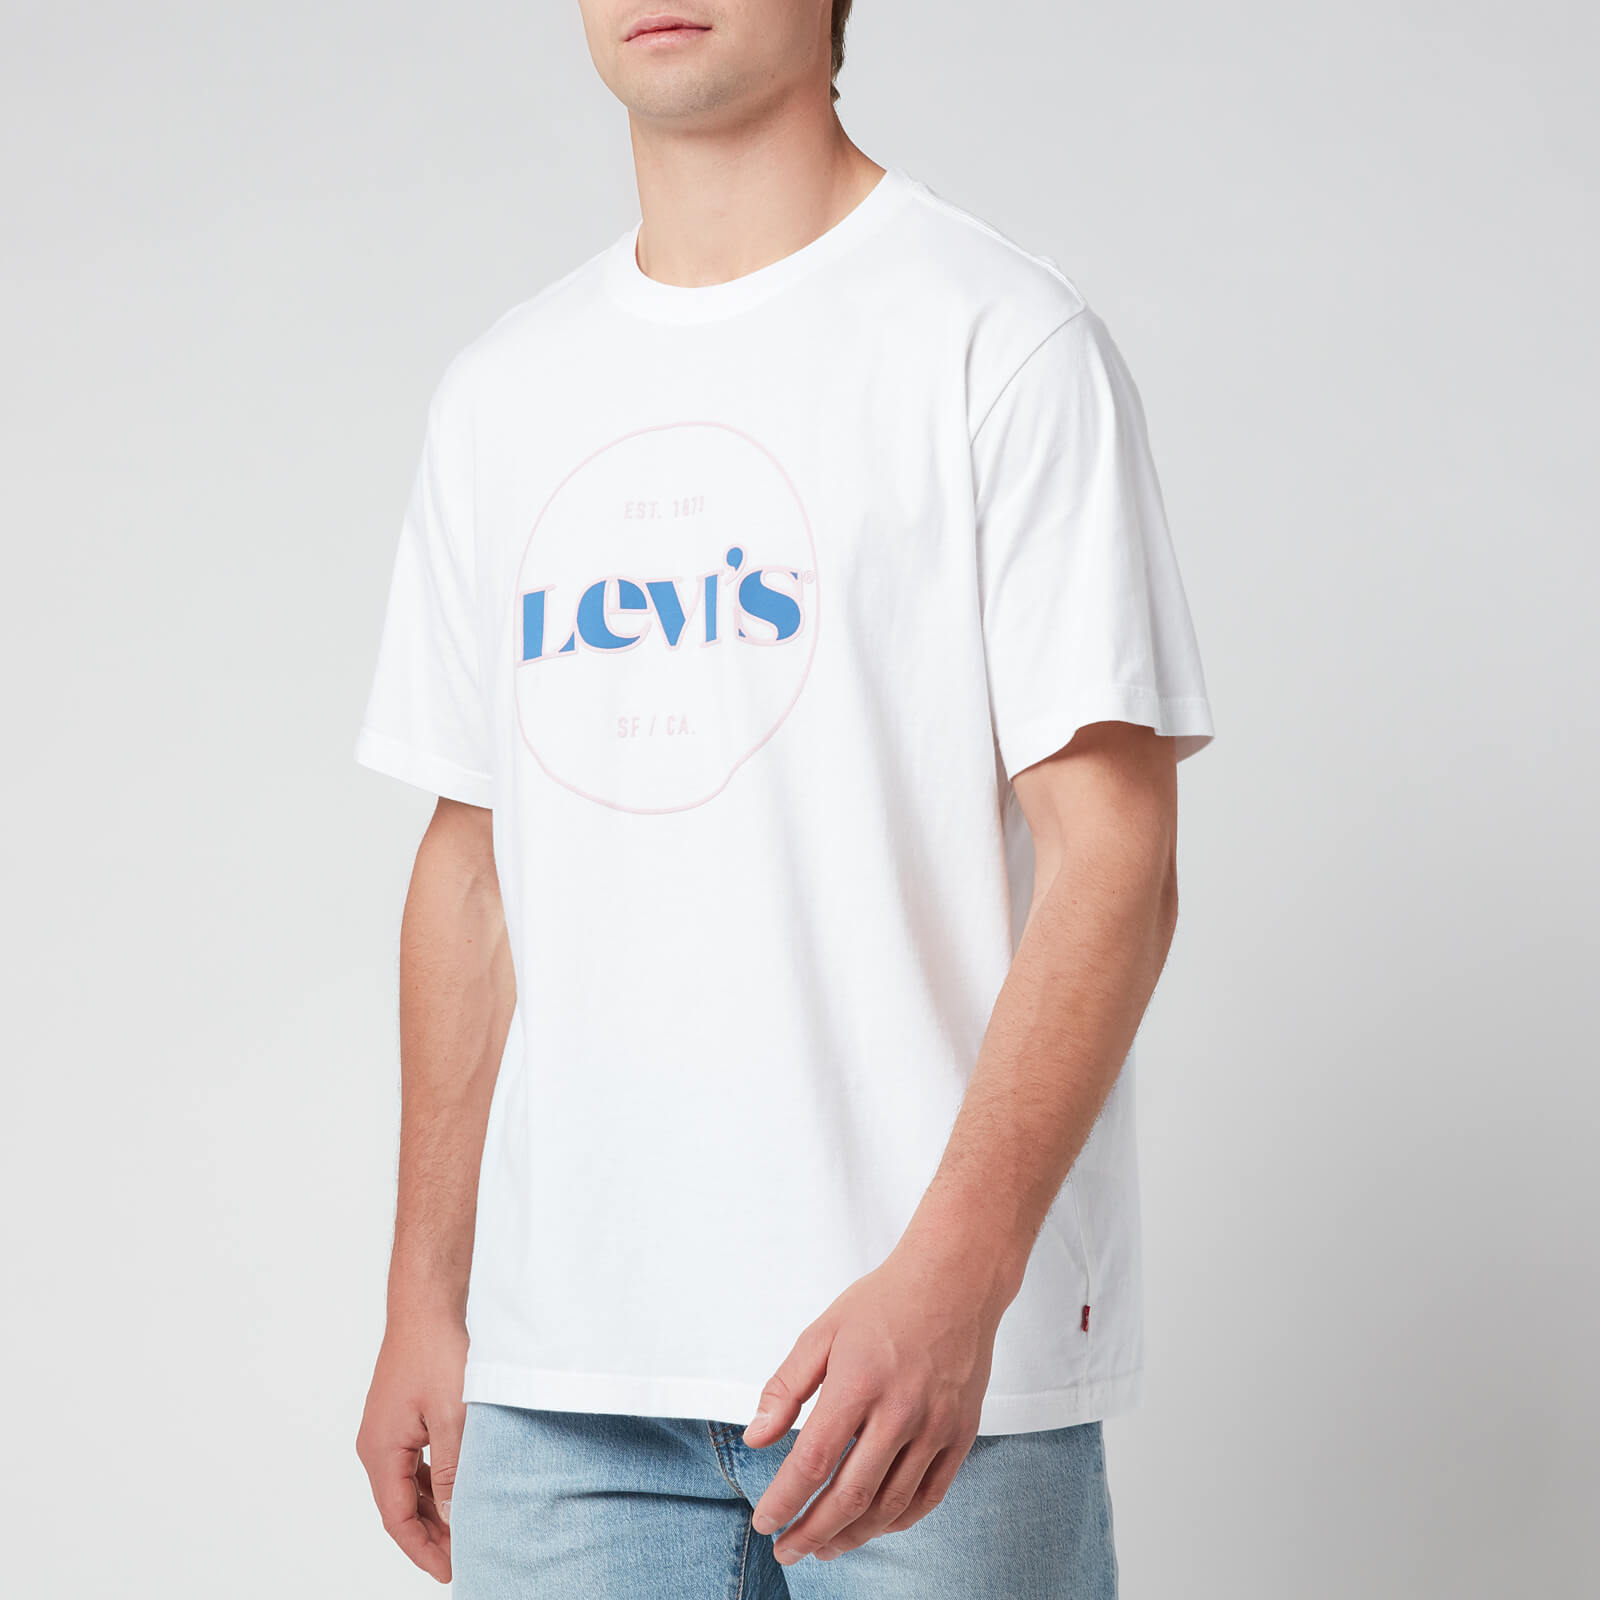 Levi's Men's Relaxed Fit Seasonal T-Shirt - White - S